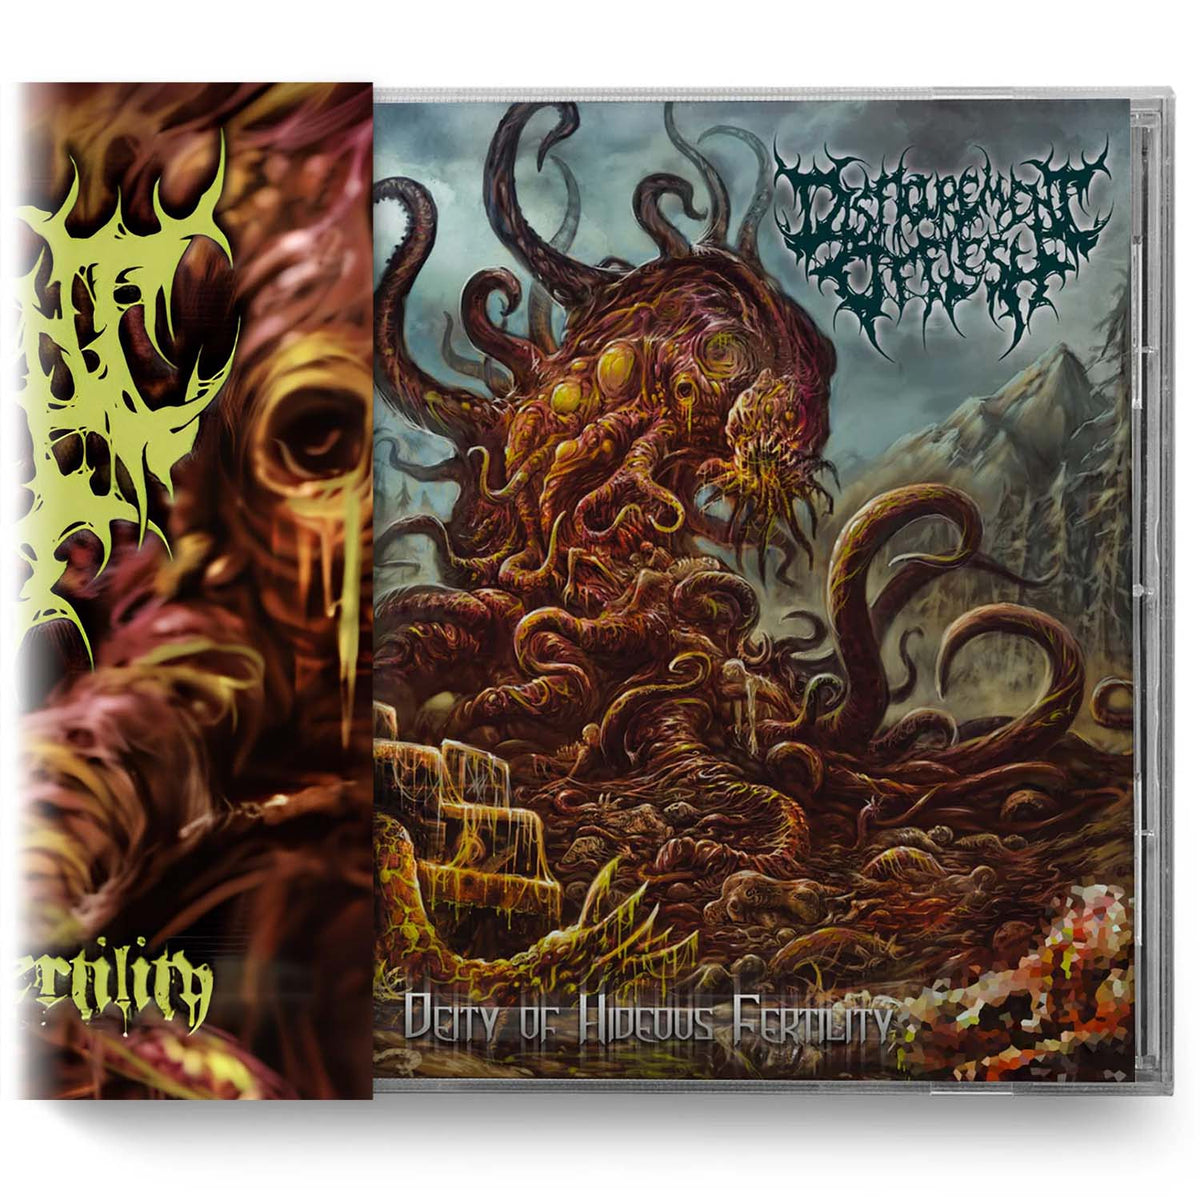 Disfigurement of Flesh "Deity of Hideous Fertility" CD